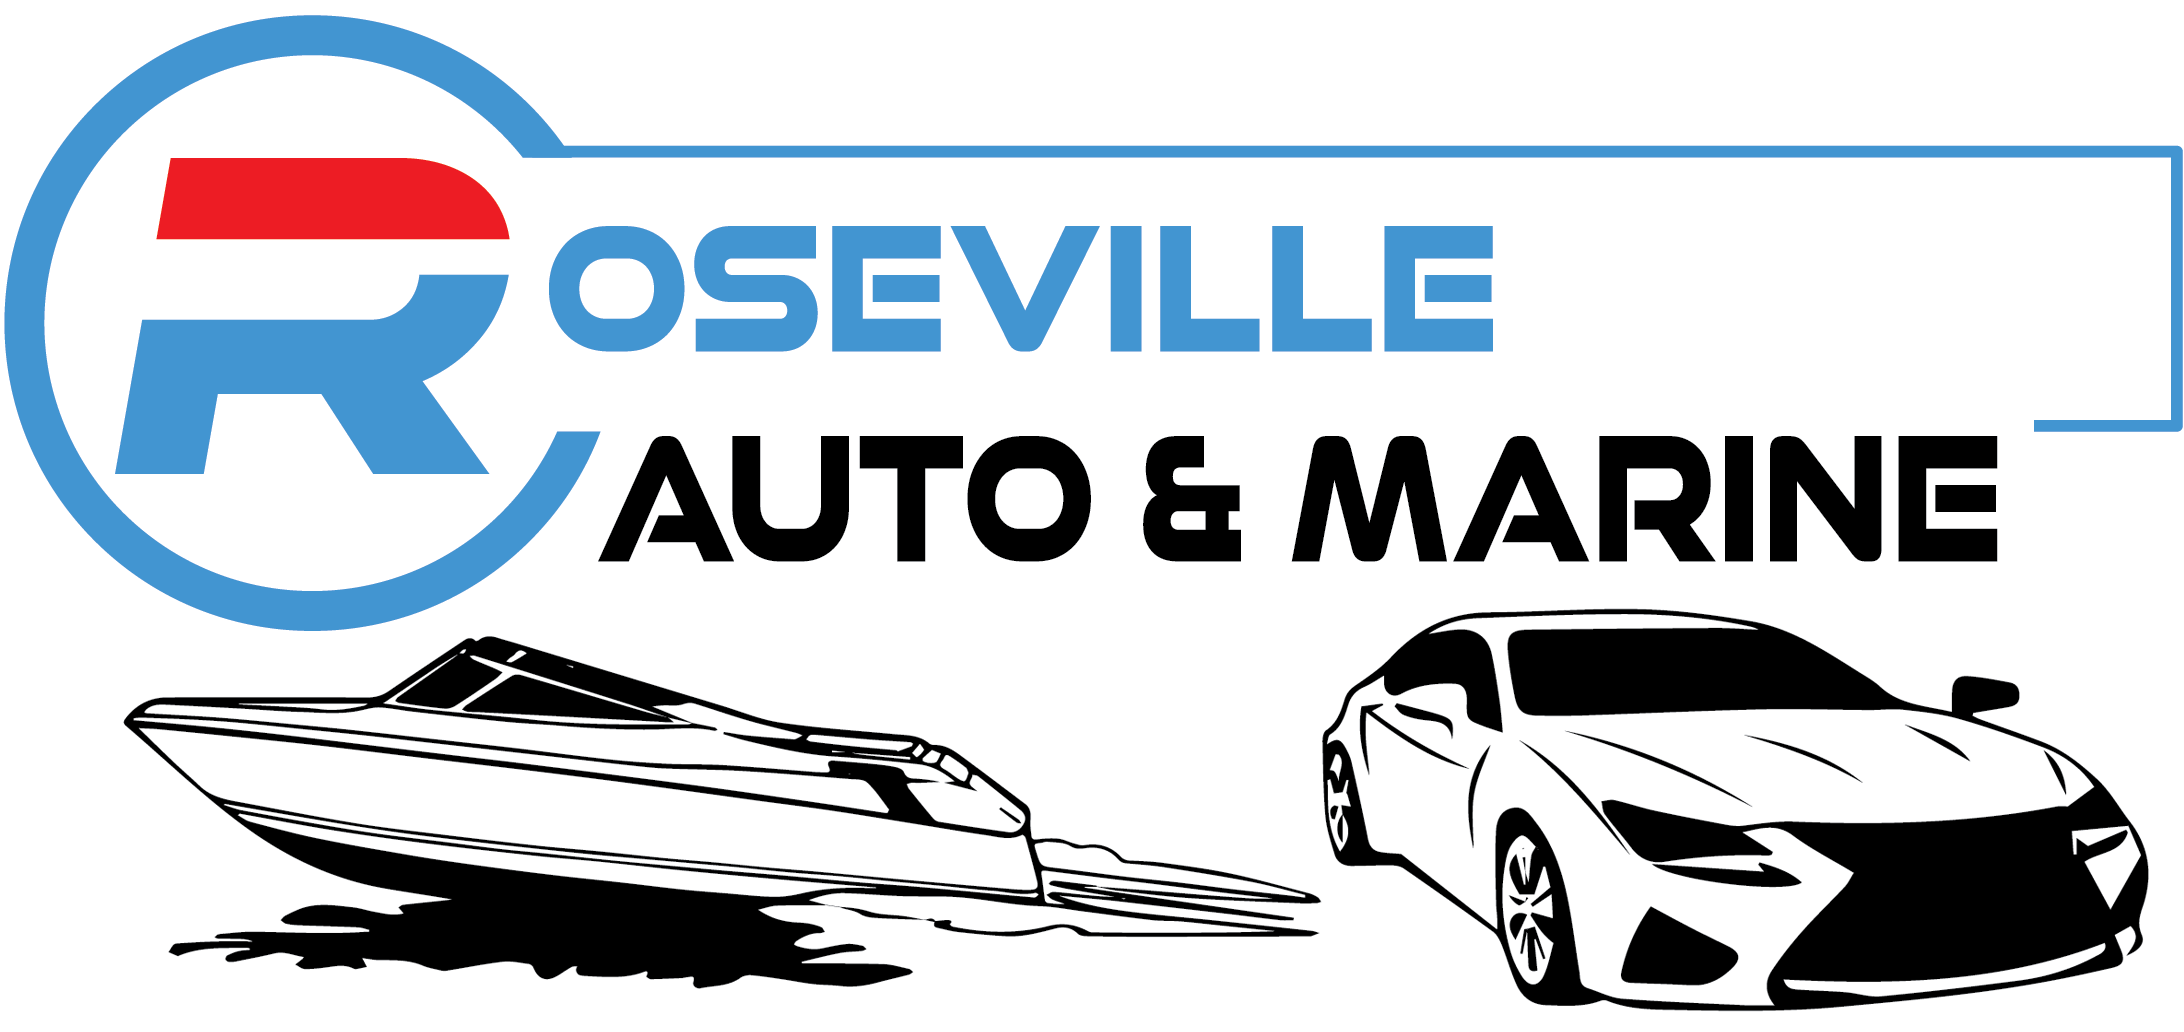 Roseville Auto and Marine